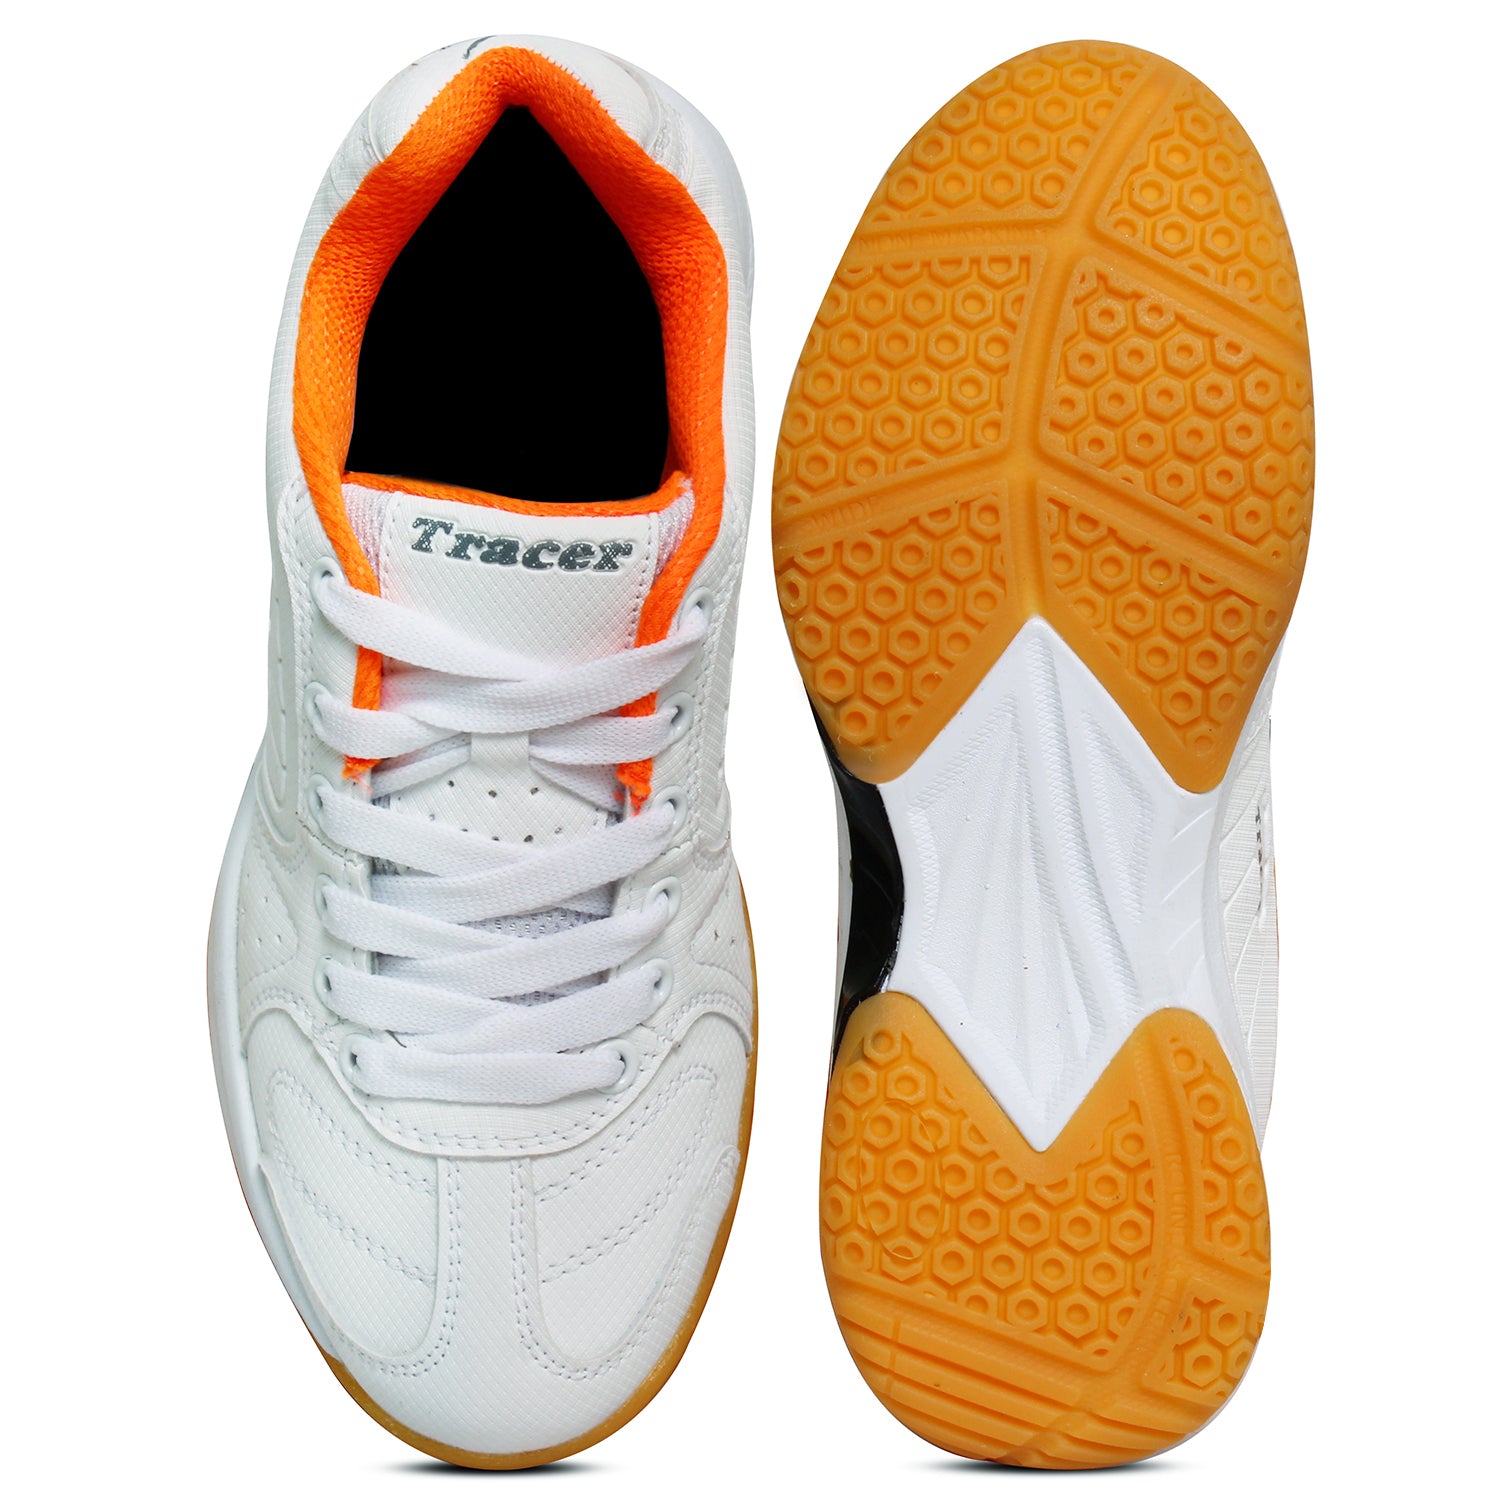 Tennis Badminton Sports Shoe For Kid's White